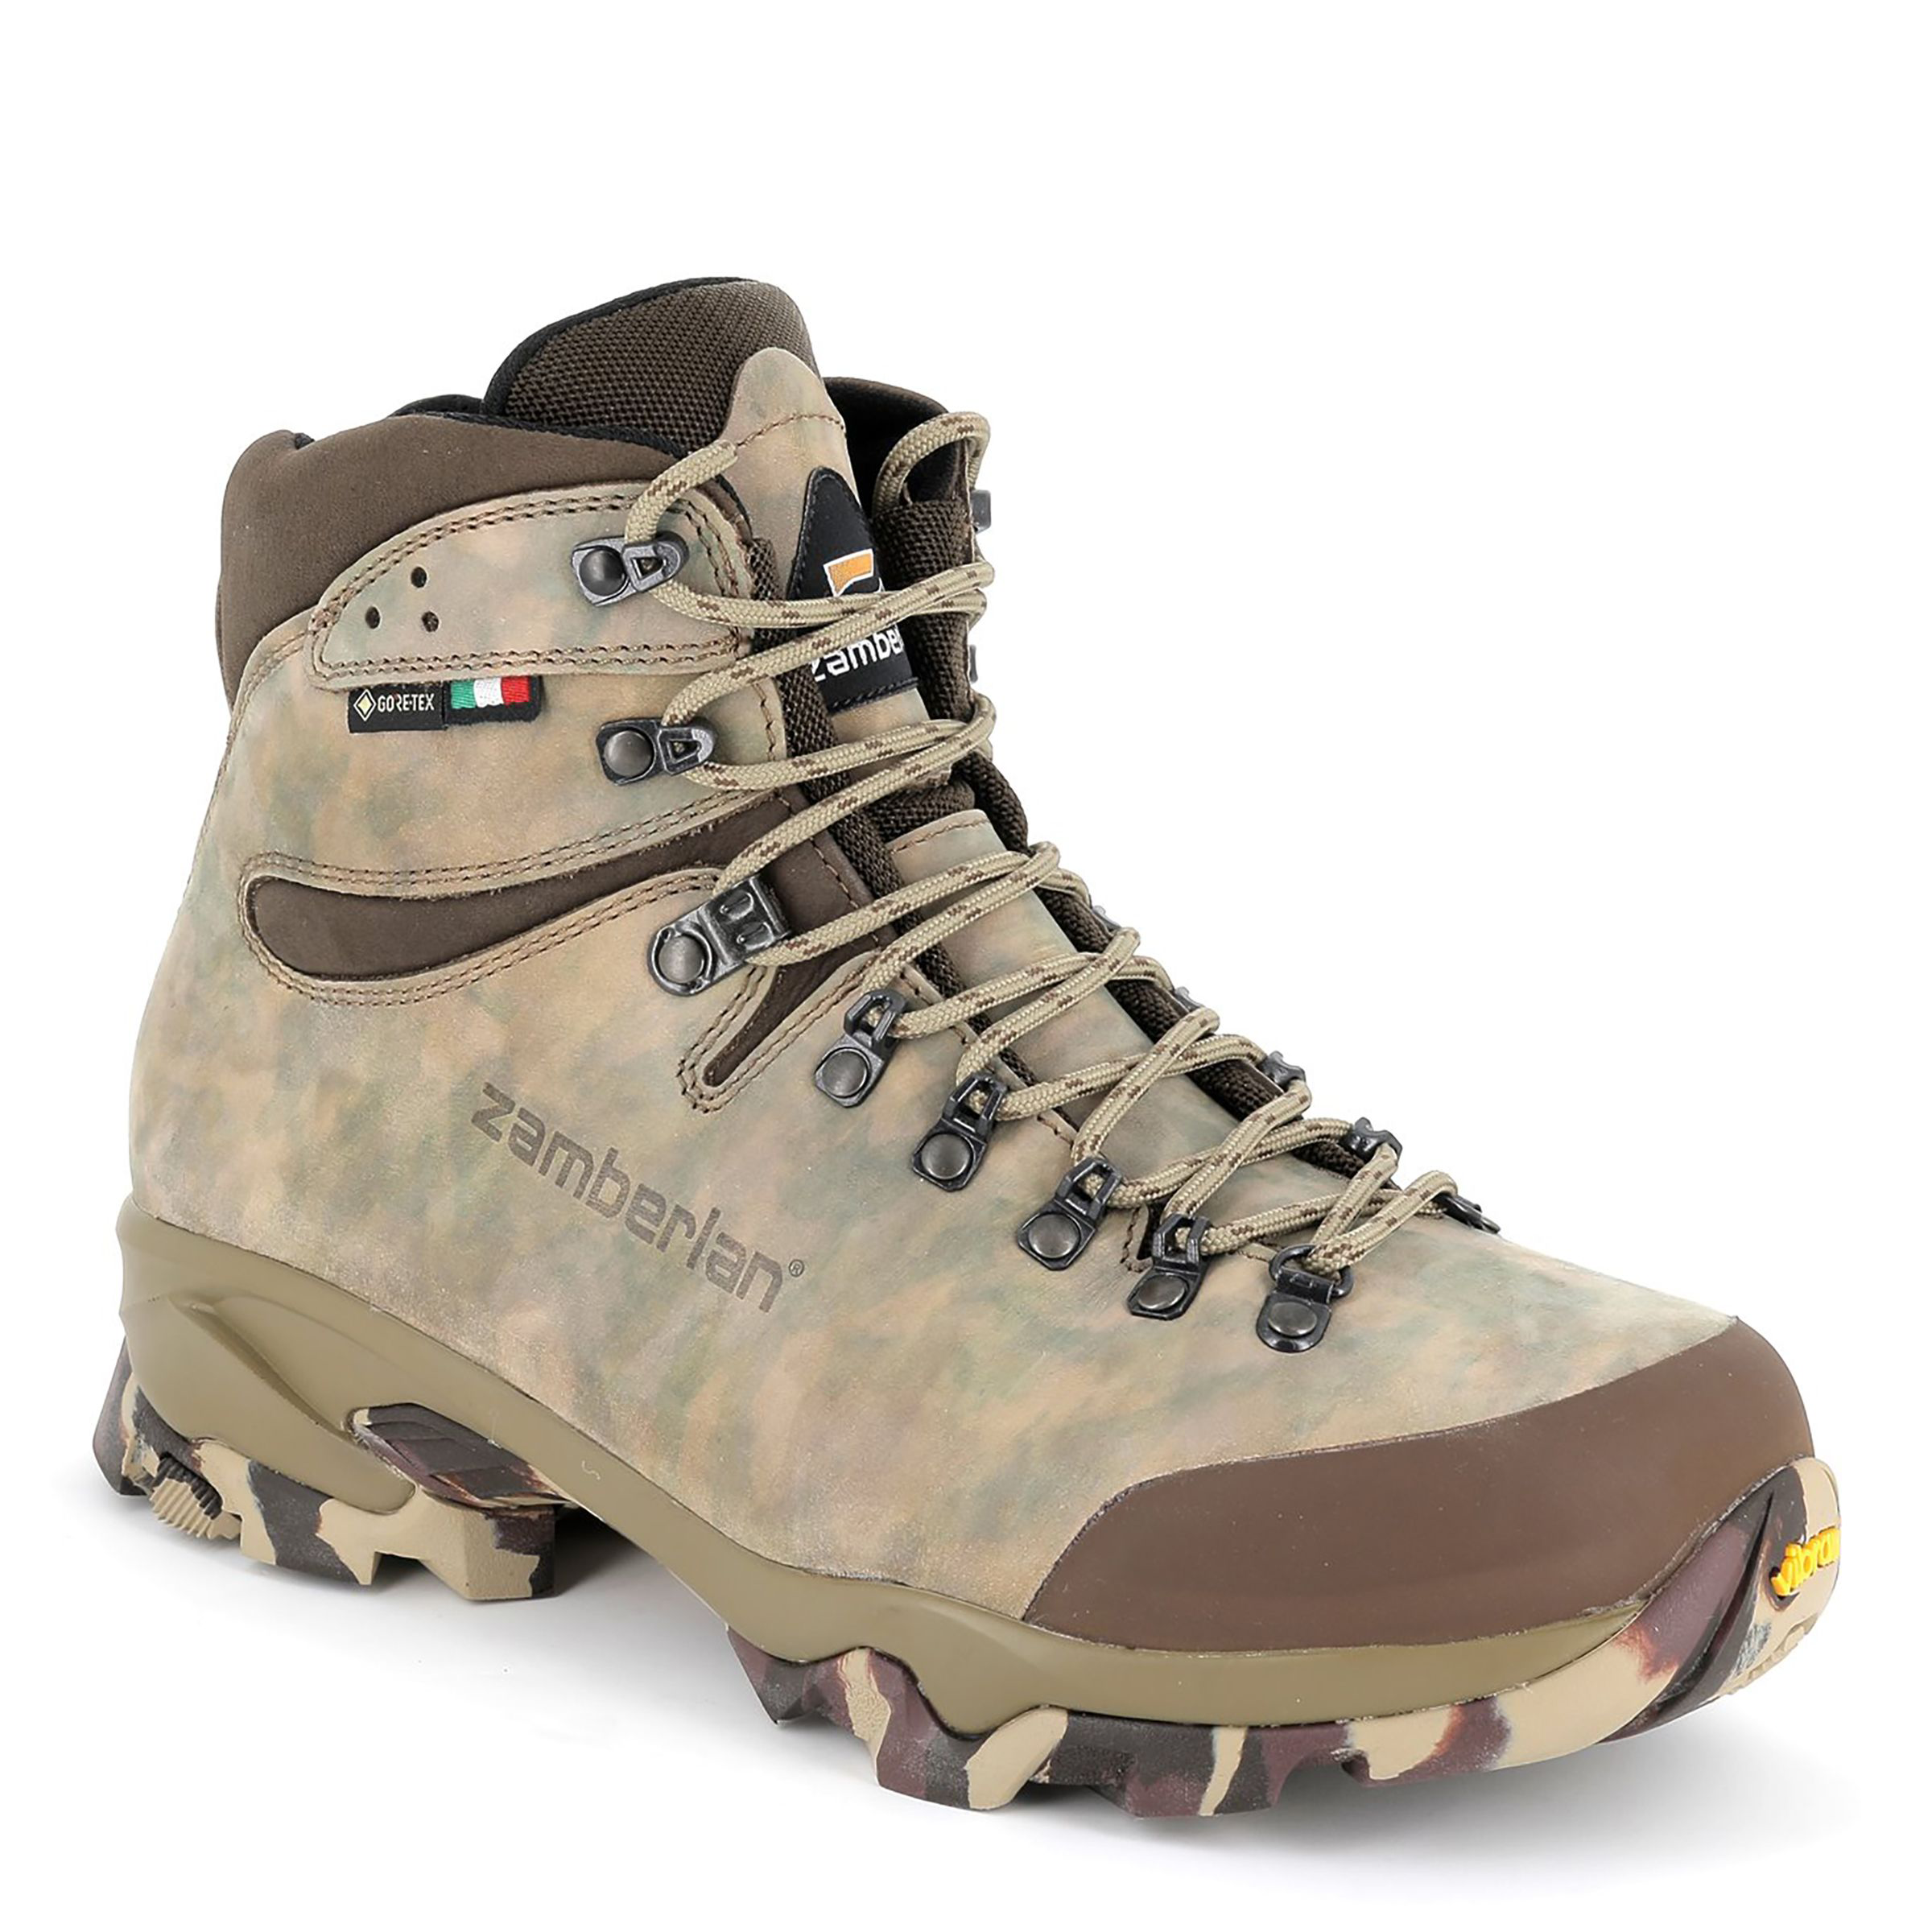 Zamberlan 1213 Leopard GTX RR GORE-TEX Hunting Boots for Men - Beige - 8W